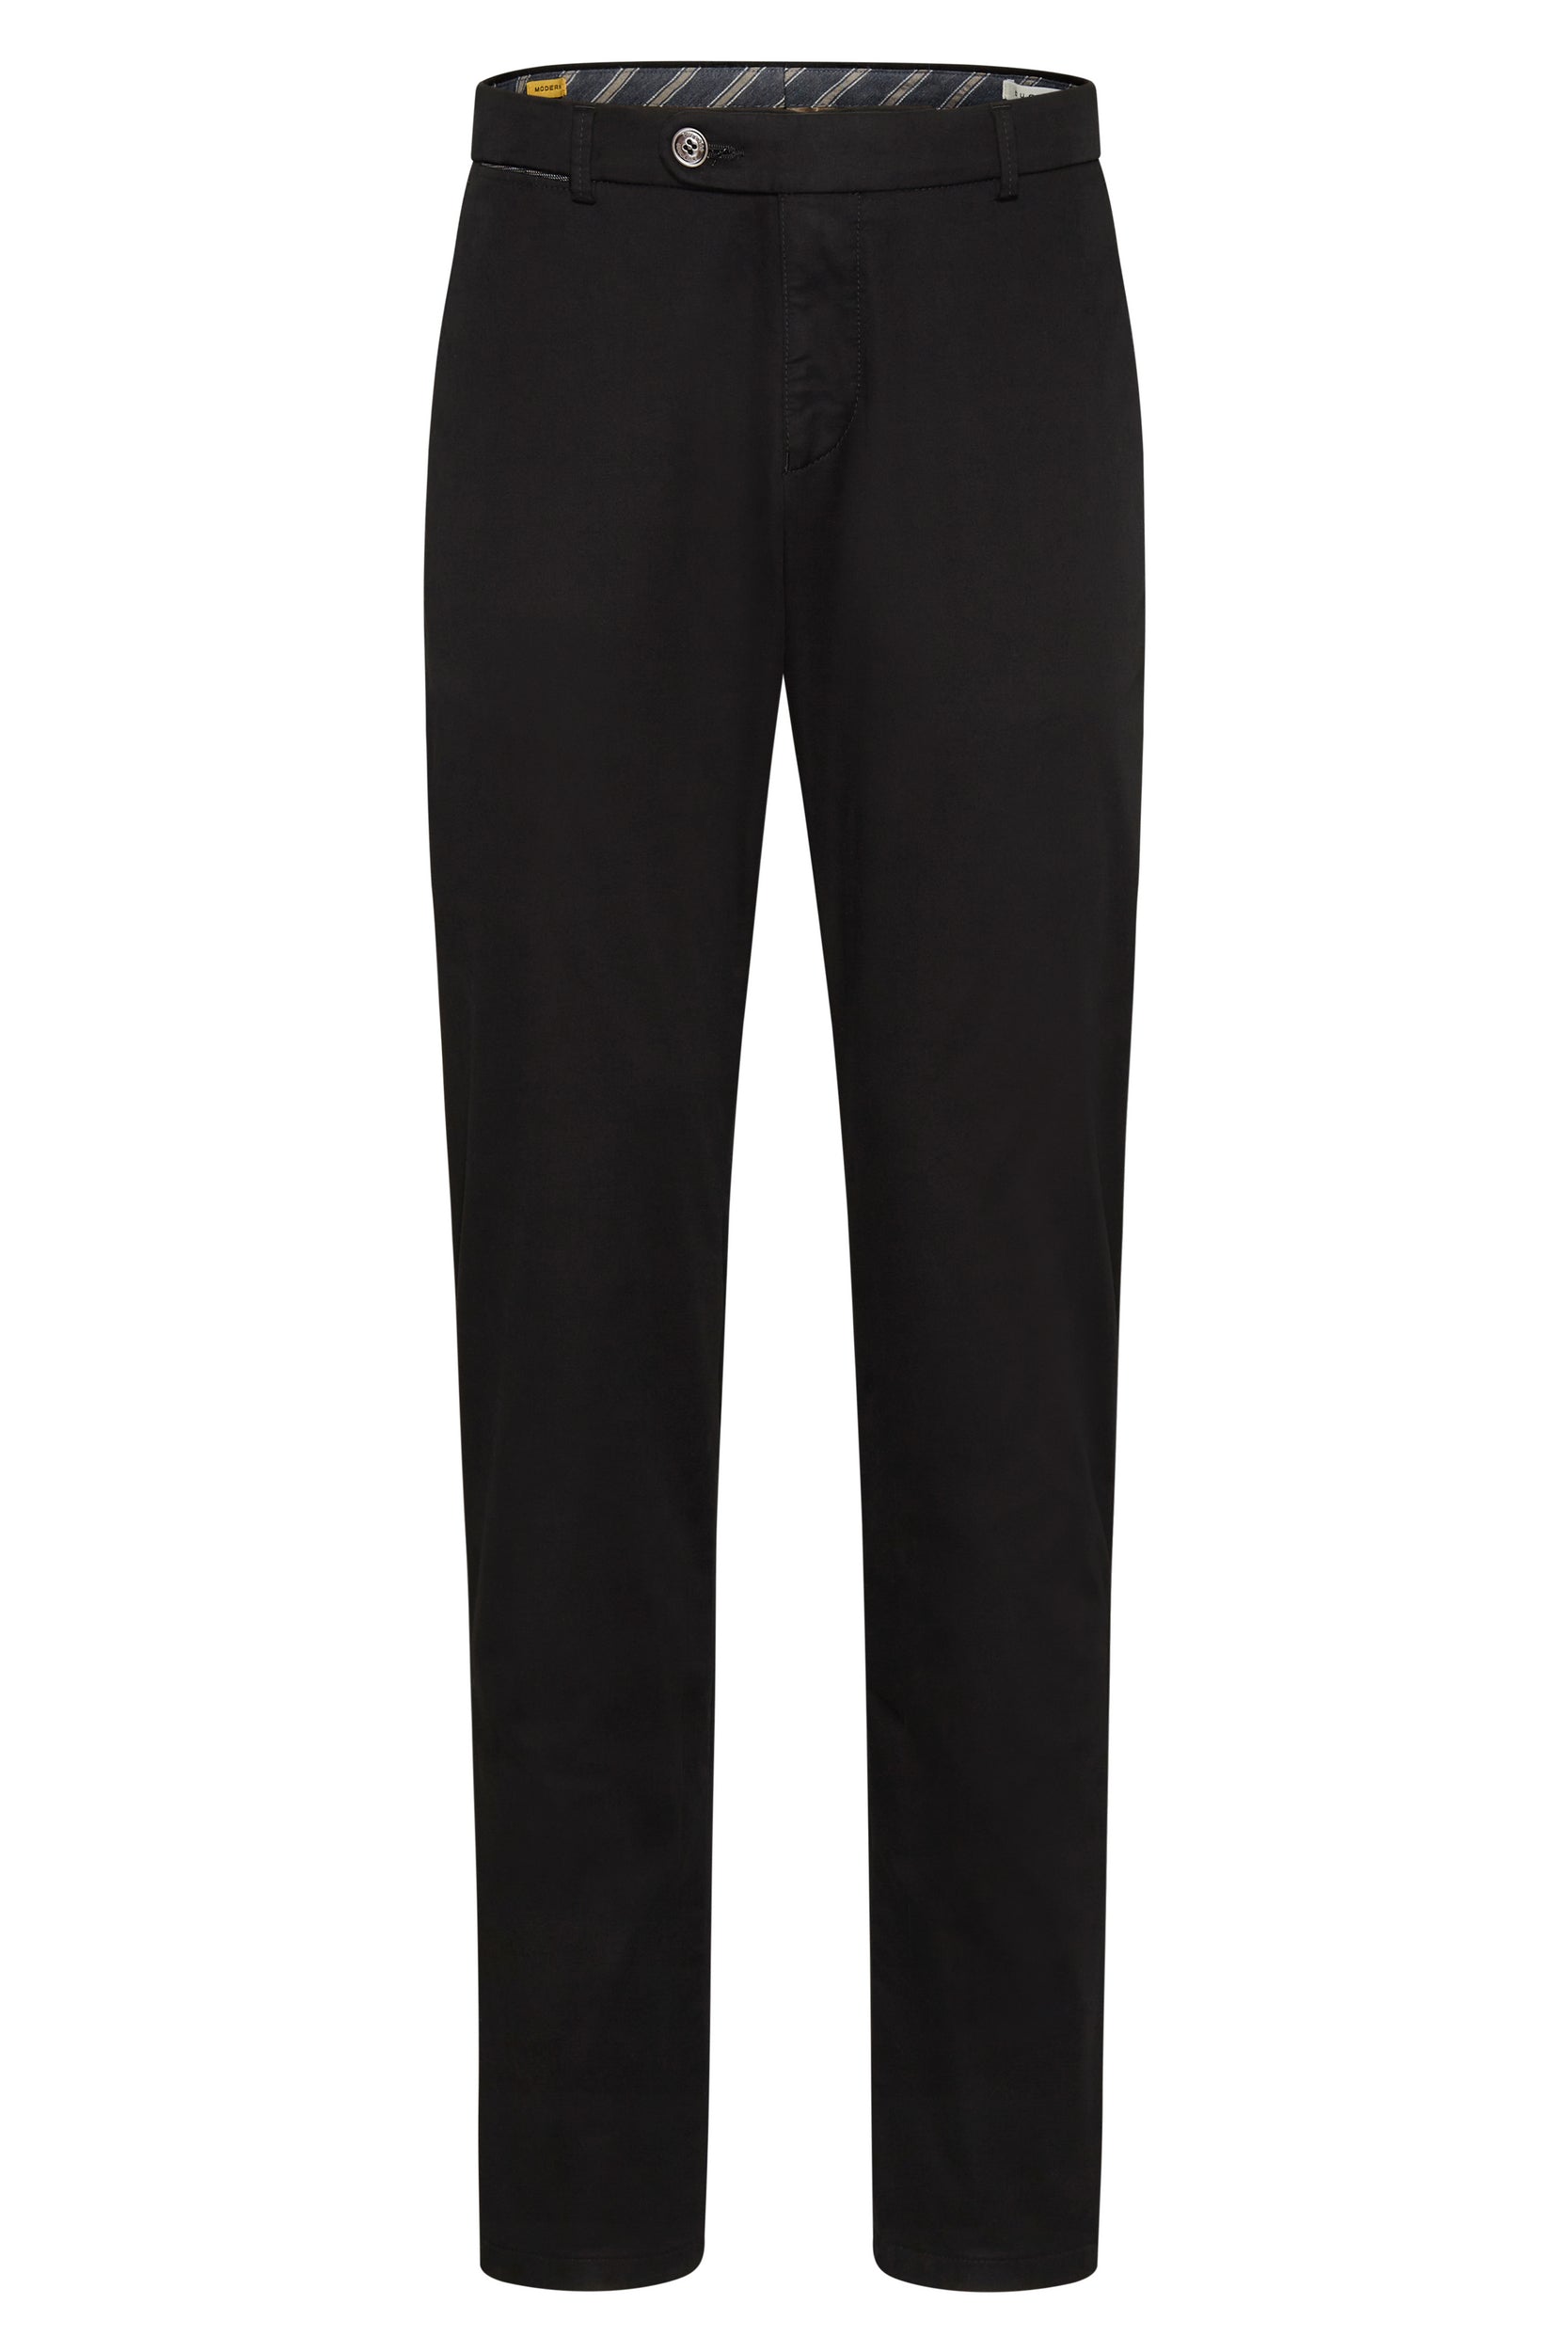 Bugatti Men's Pants Chino Trousers Casual Black Cotton Button Zip Fly Size  34/34 | eBay